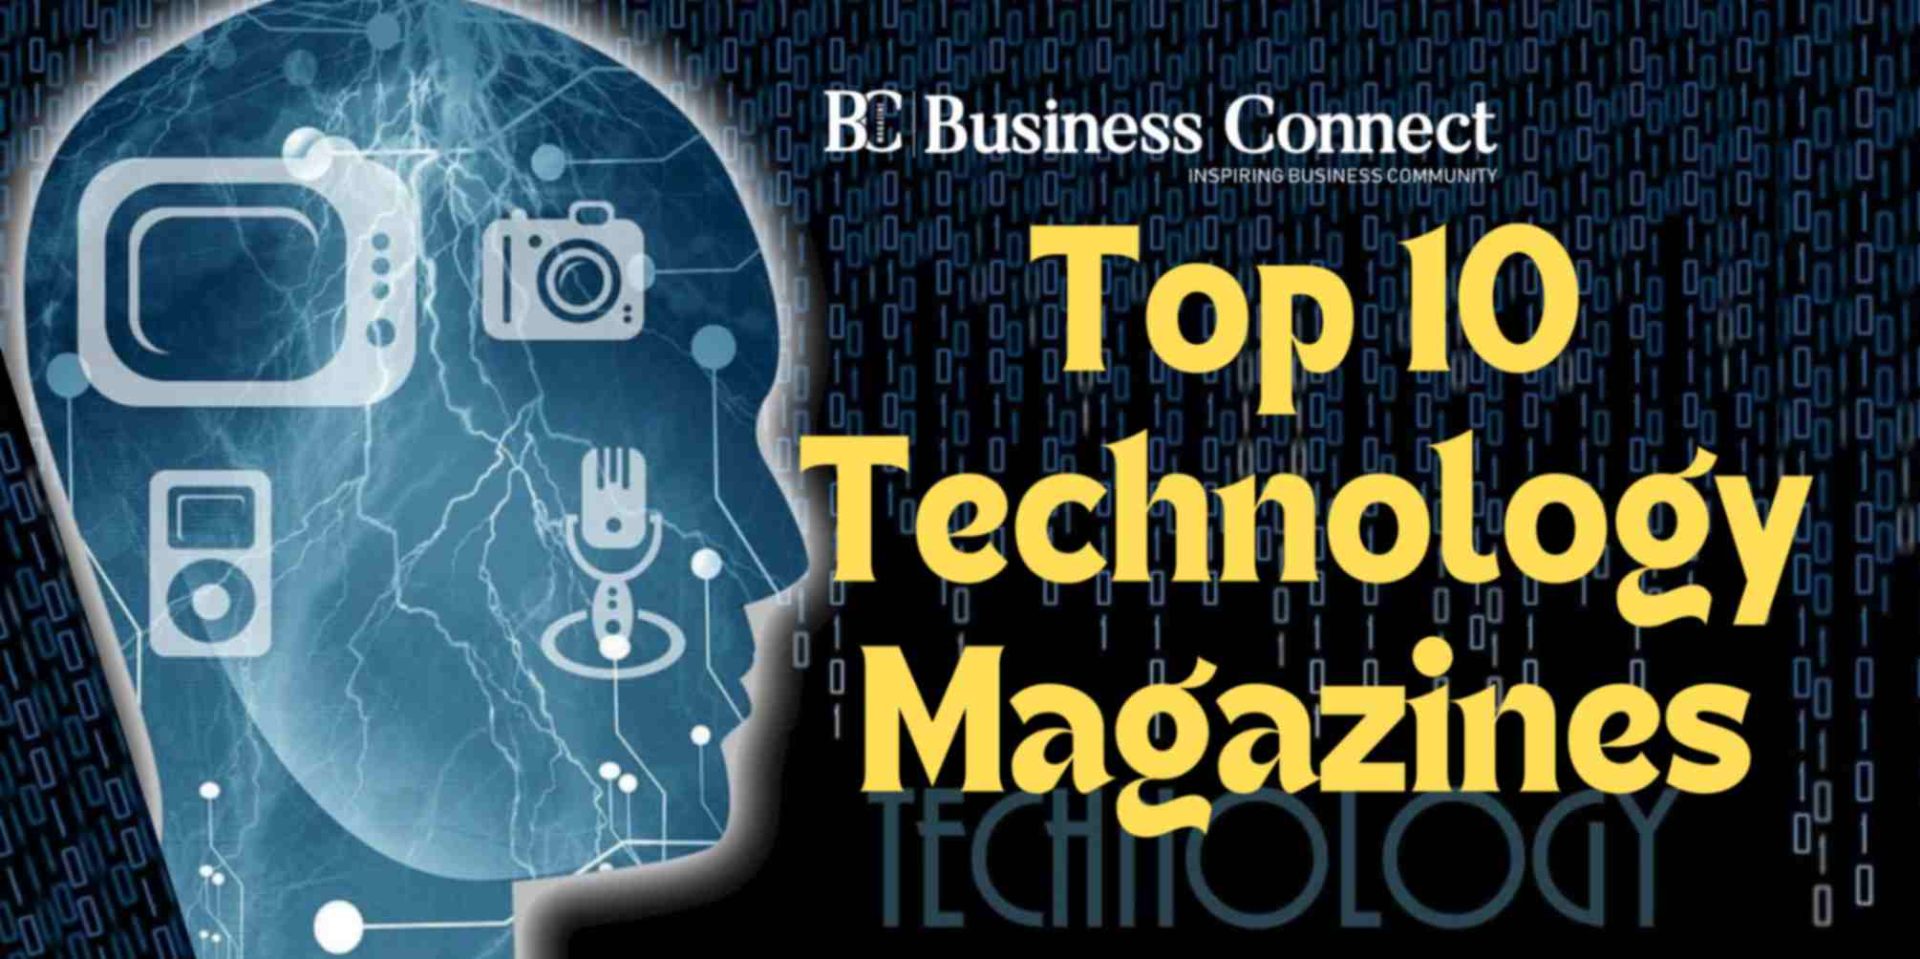 Top 10 Technology Magazines.jpg